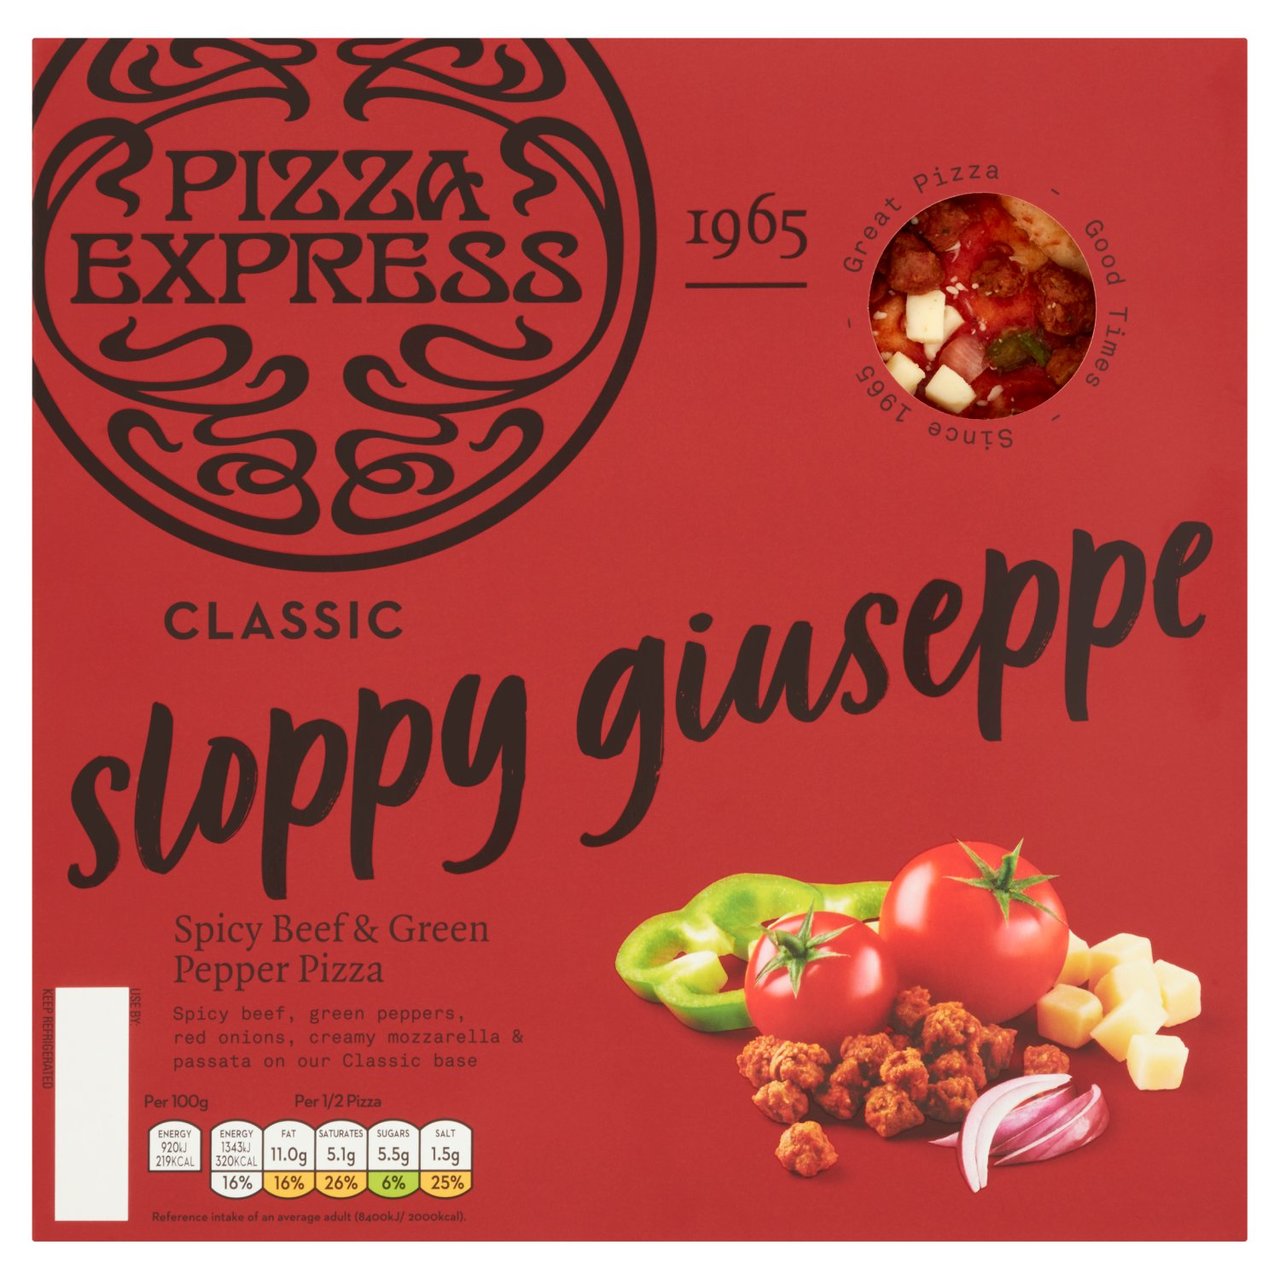 Pizza Express Sloppy Giuseppe 305g